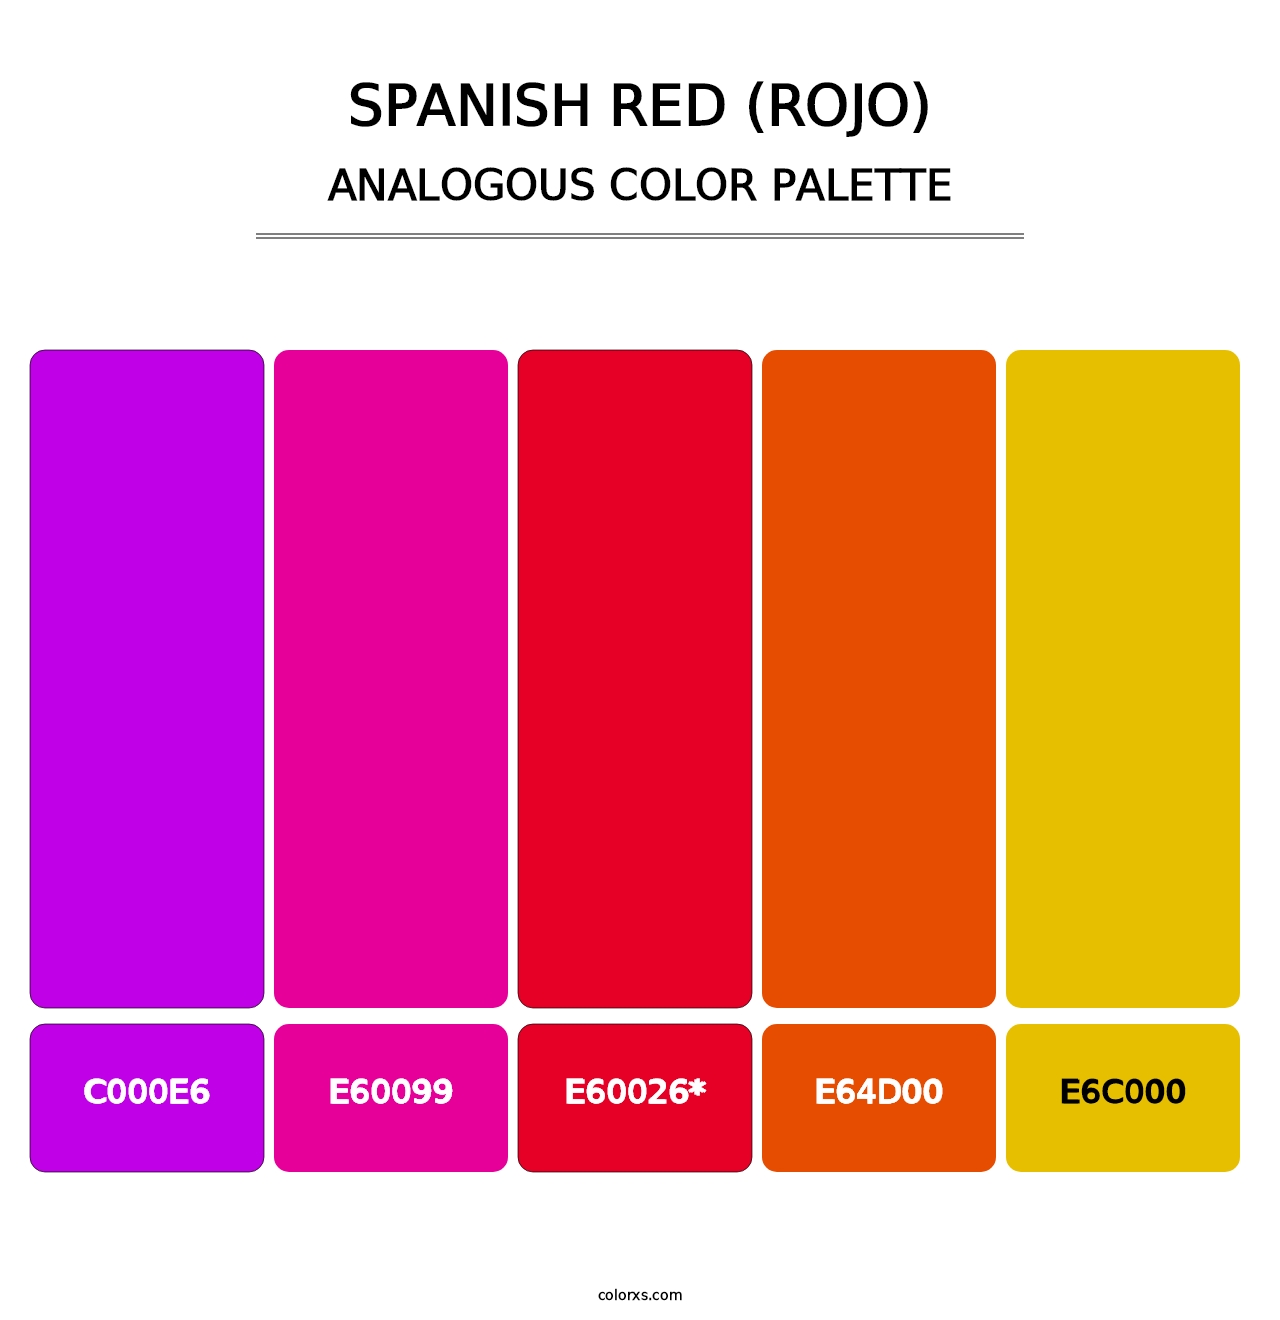 Spanish Red (Rojo) - Analogous Color Palette